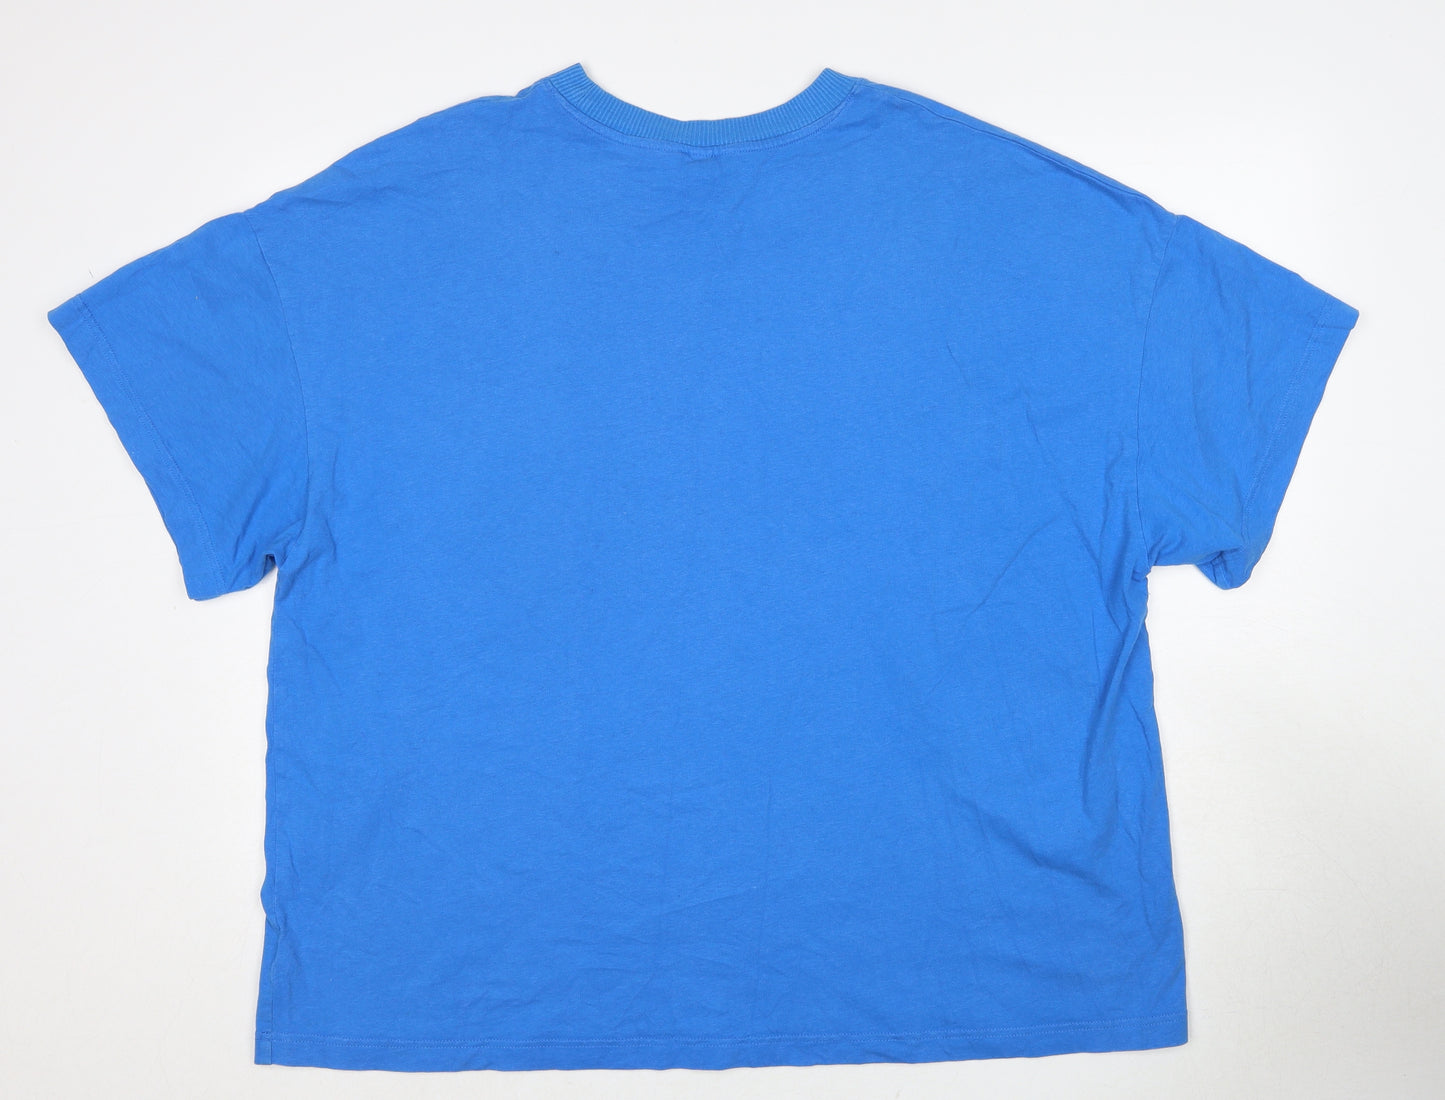 H&M Mens Blue Cotton T-Shirt Size XL Round Neck - New York Giants